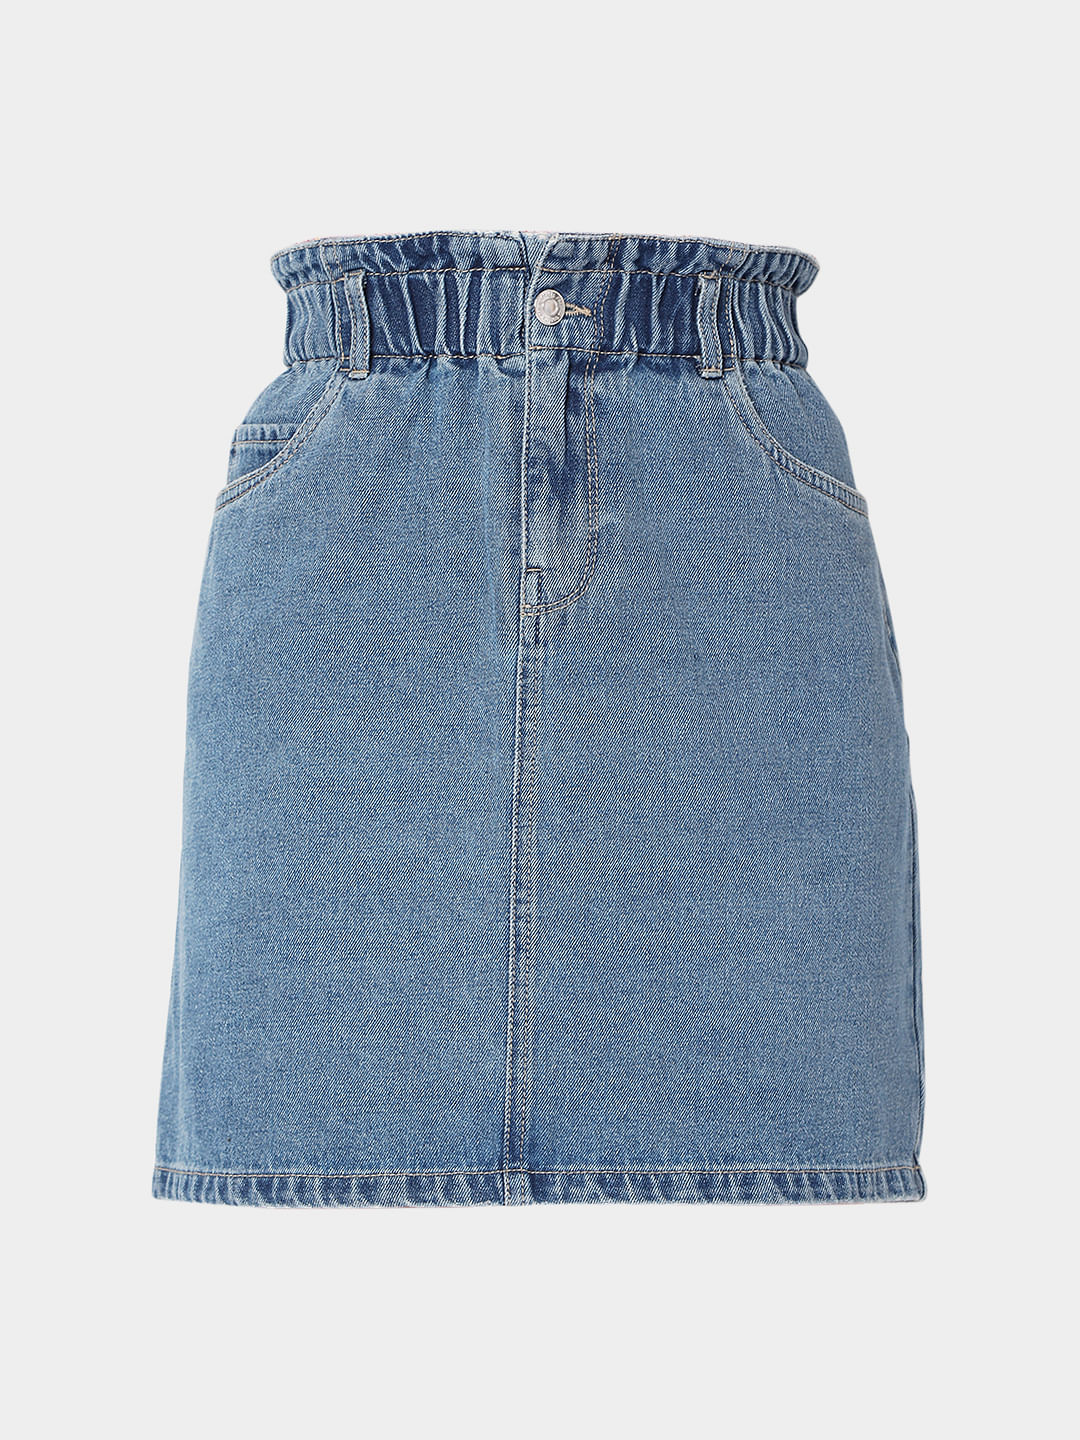 Button Up Short Denim Skirt丨Urbanic